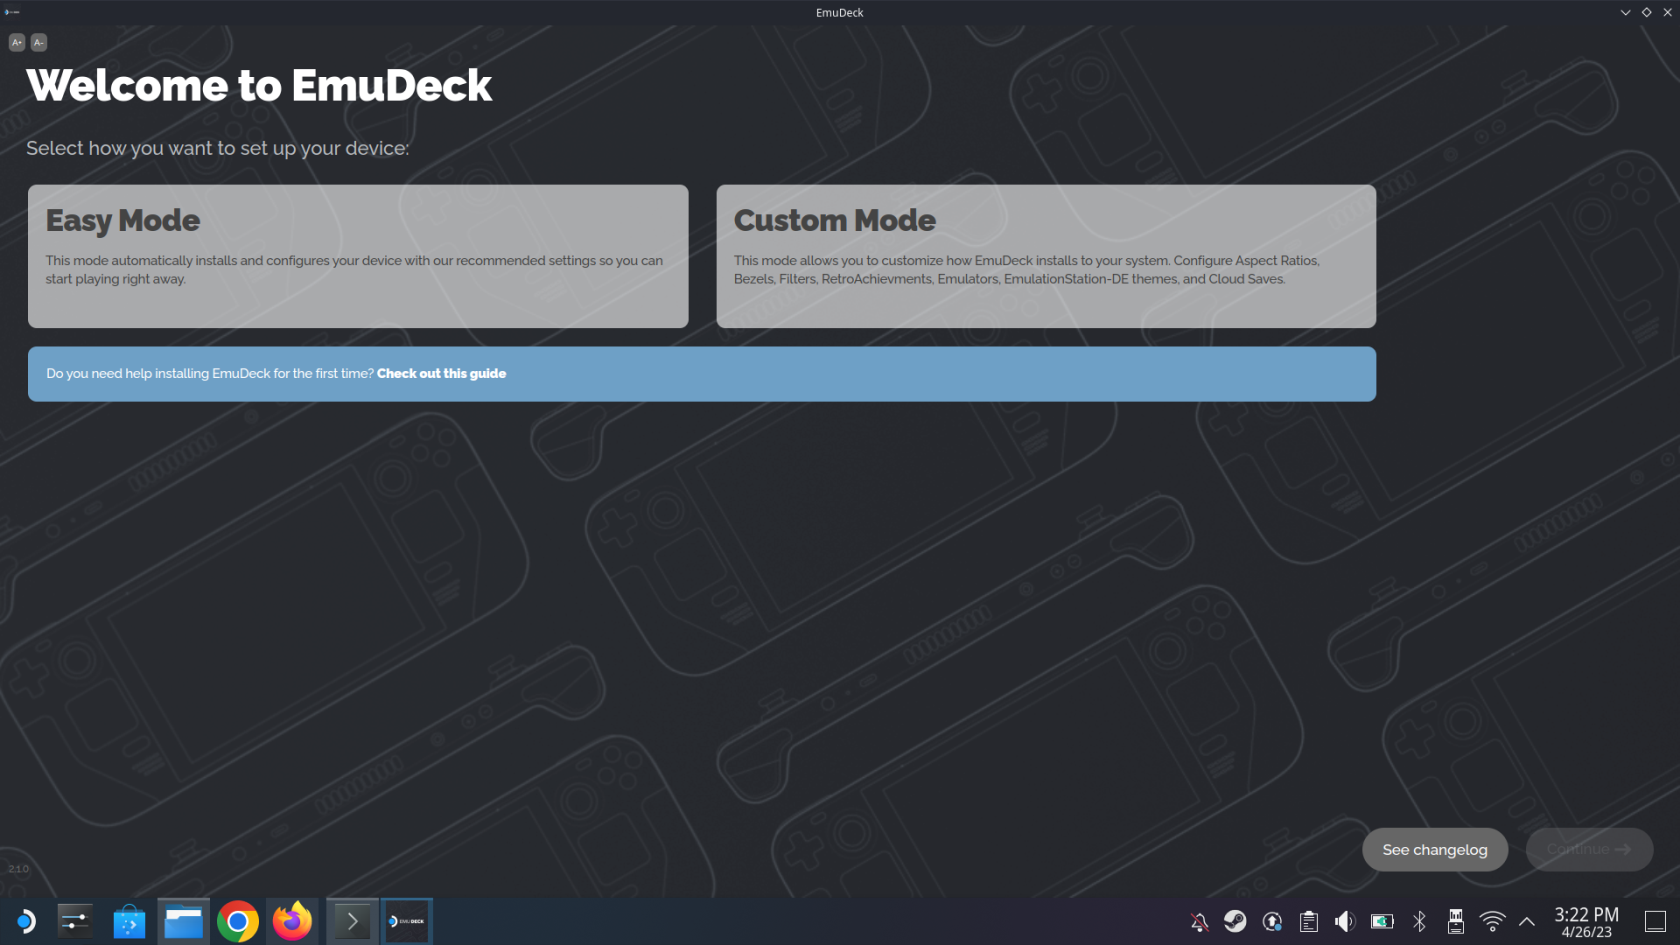 EmuDeck: Steam Deck Emulation Guide